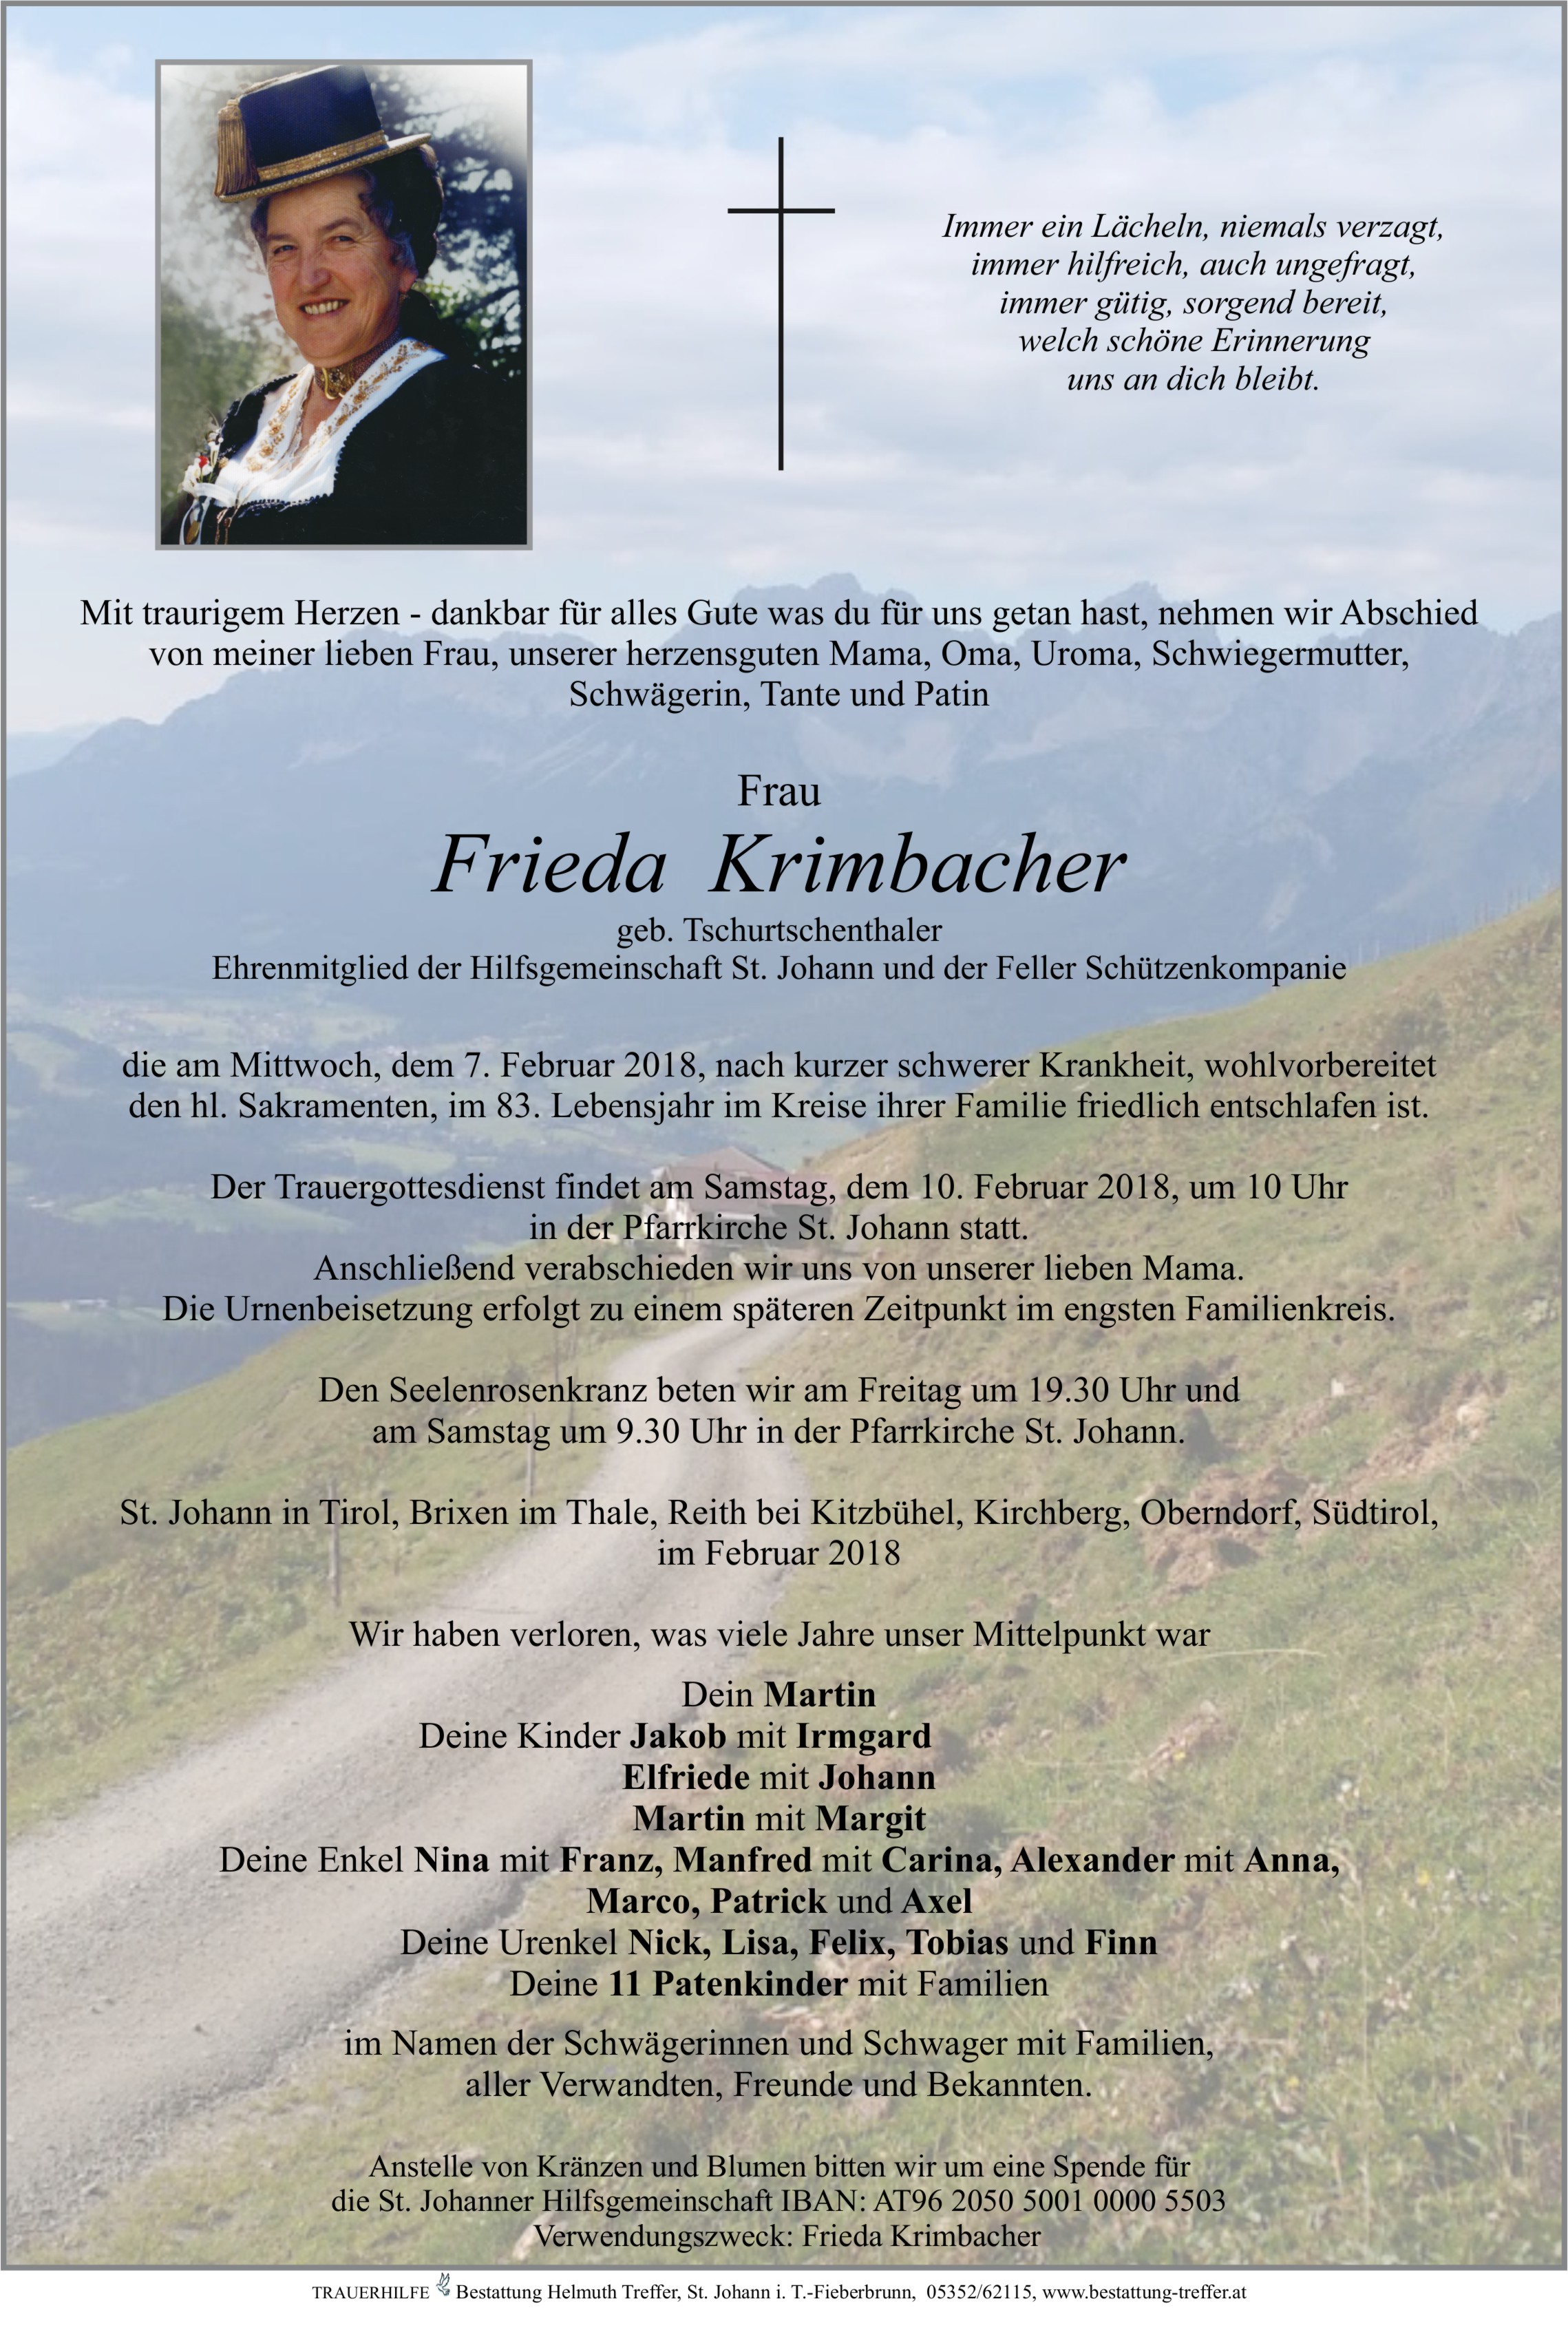 Frieda Krimbacher